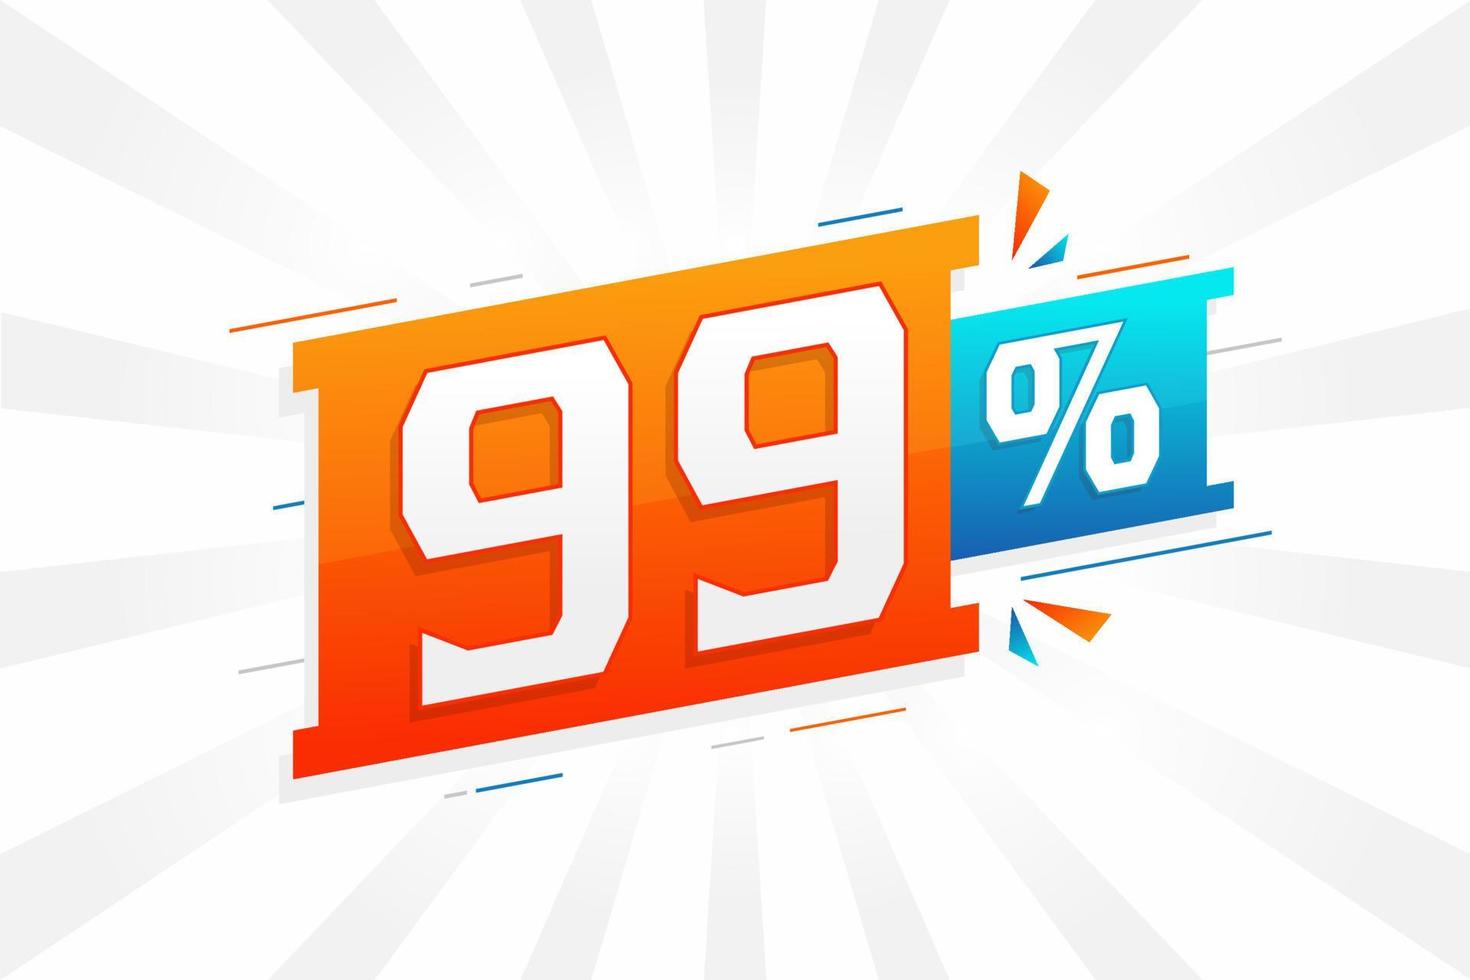 99 discount marketing banner promotion. 99 percent sales promotional design. vector